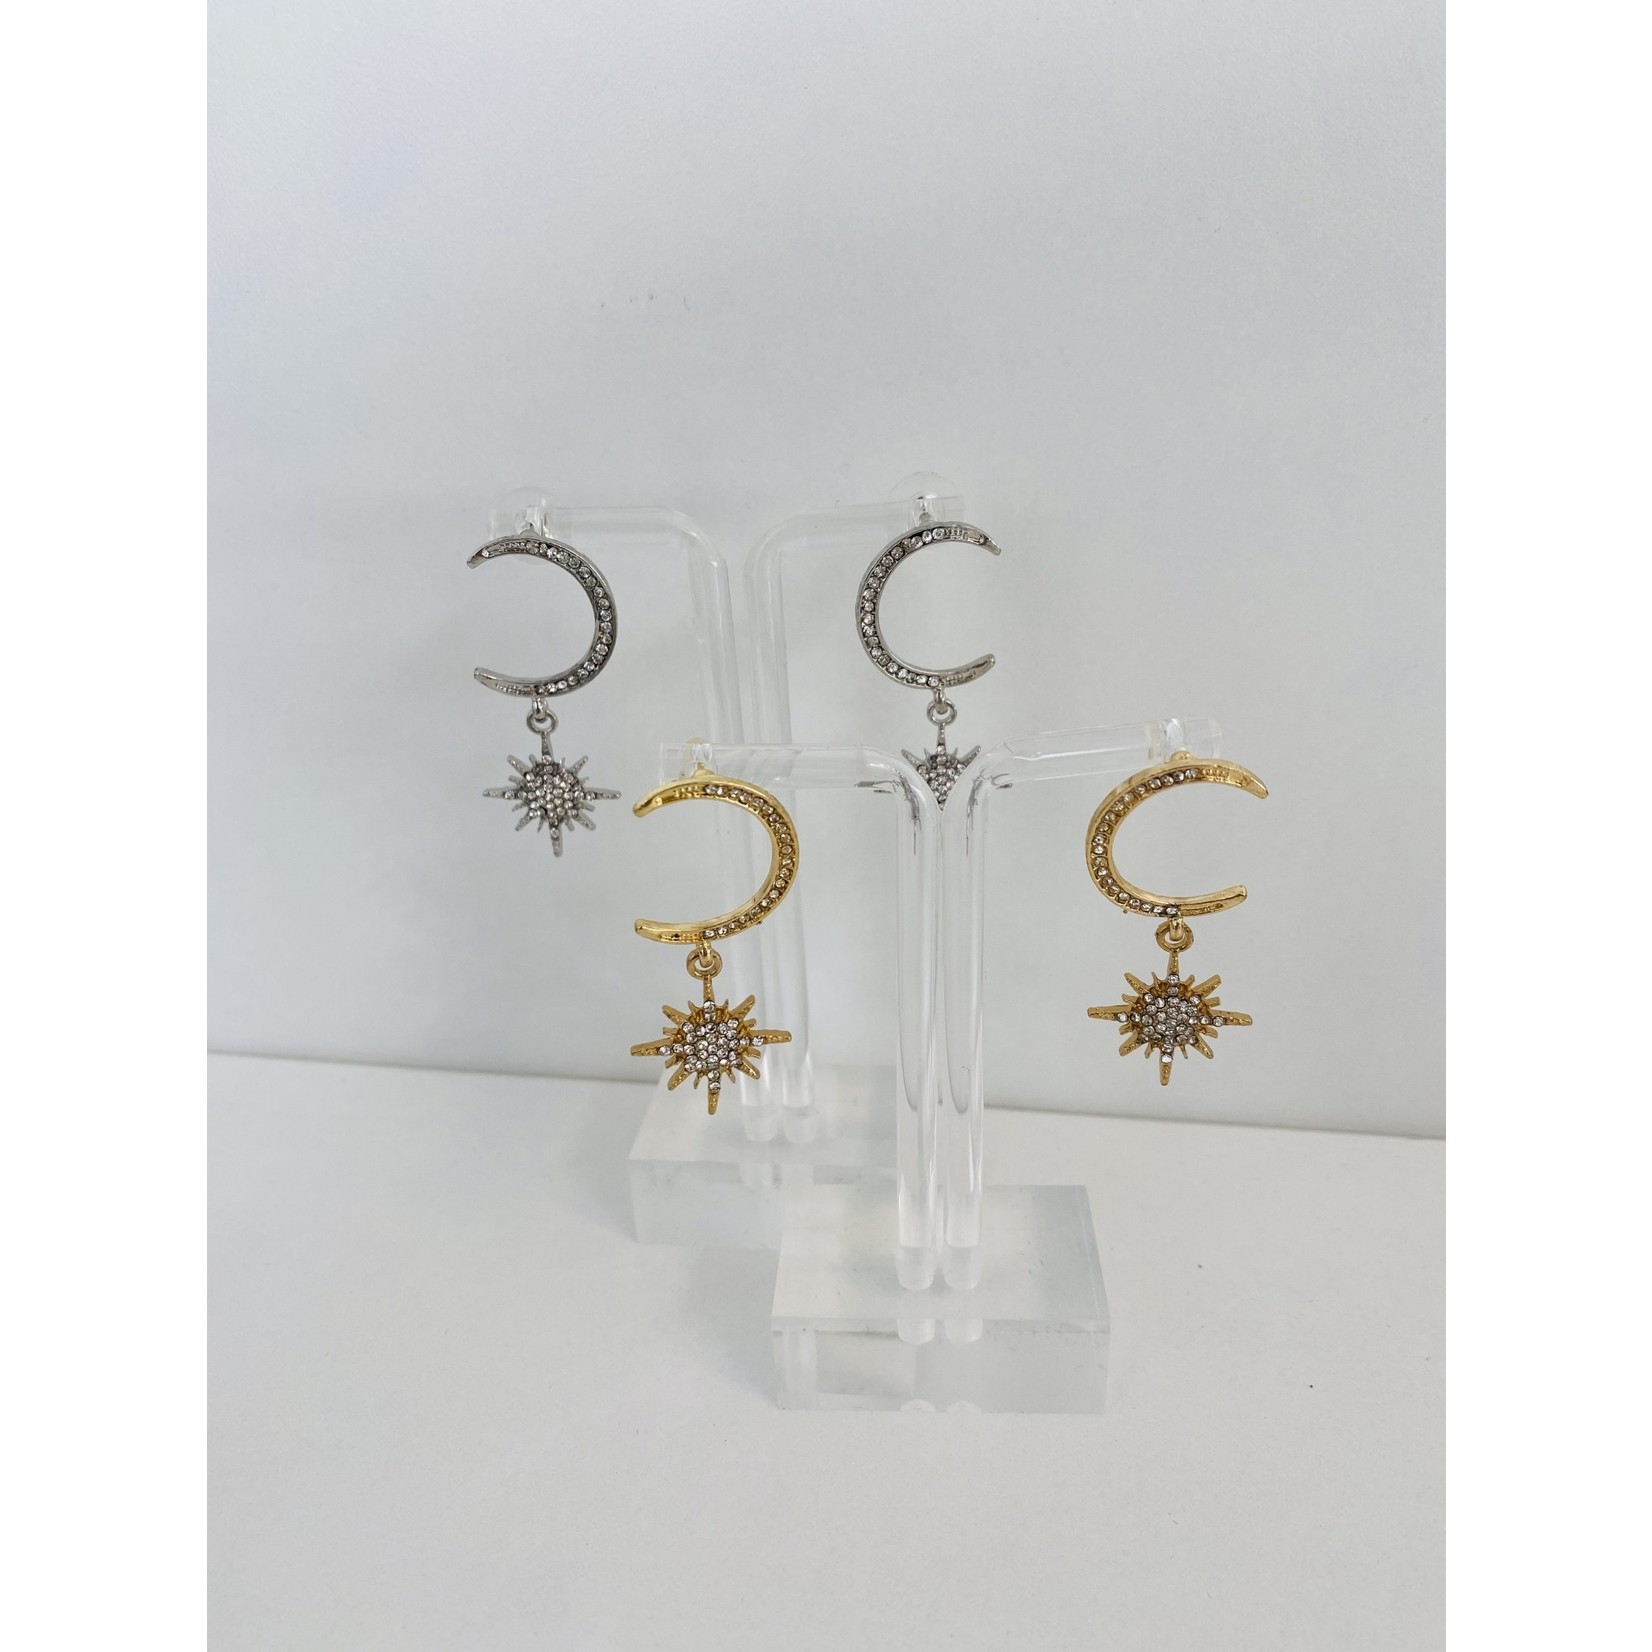 Lapetus and Star Earrings